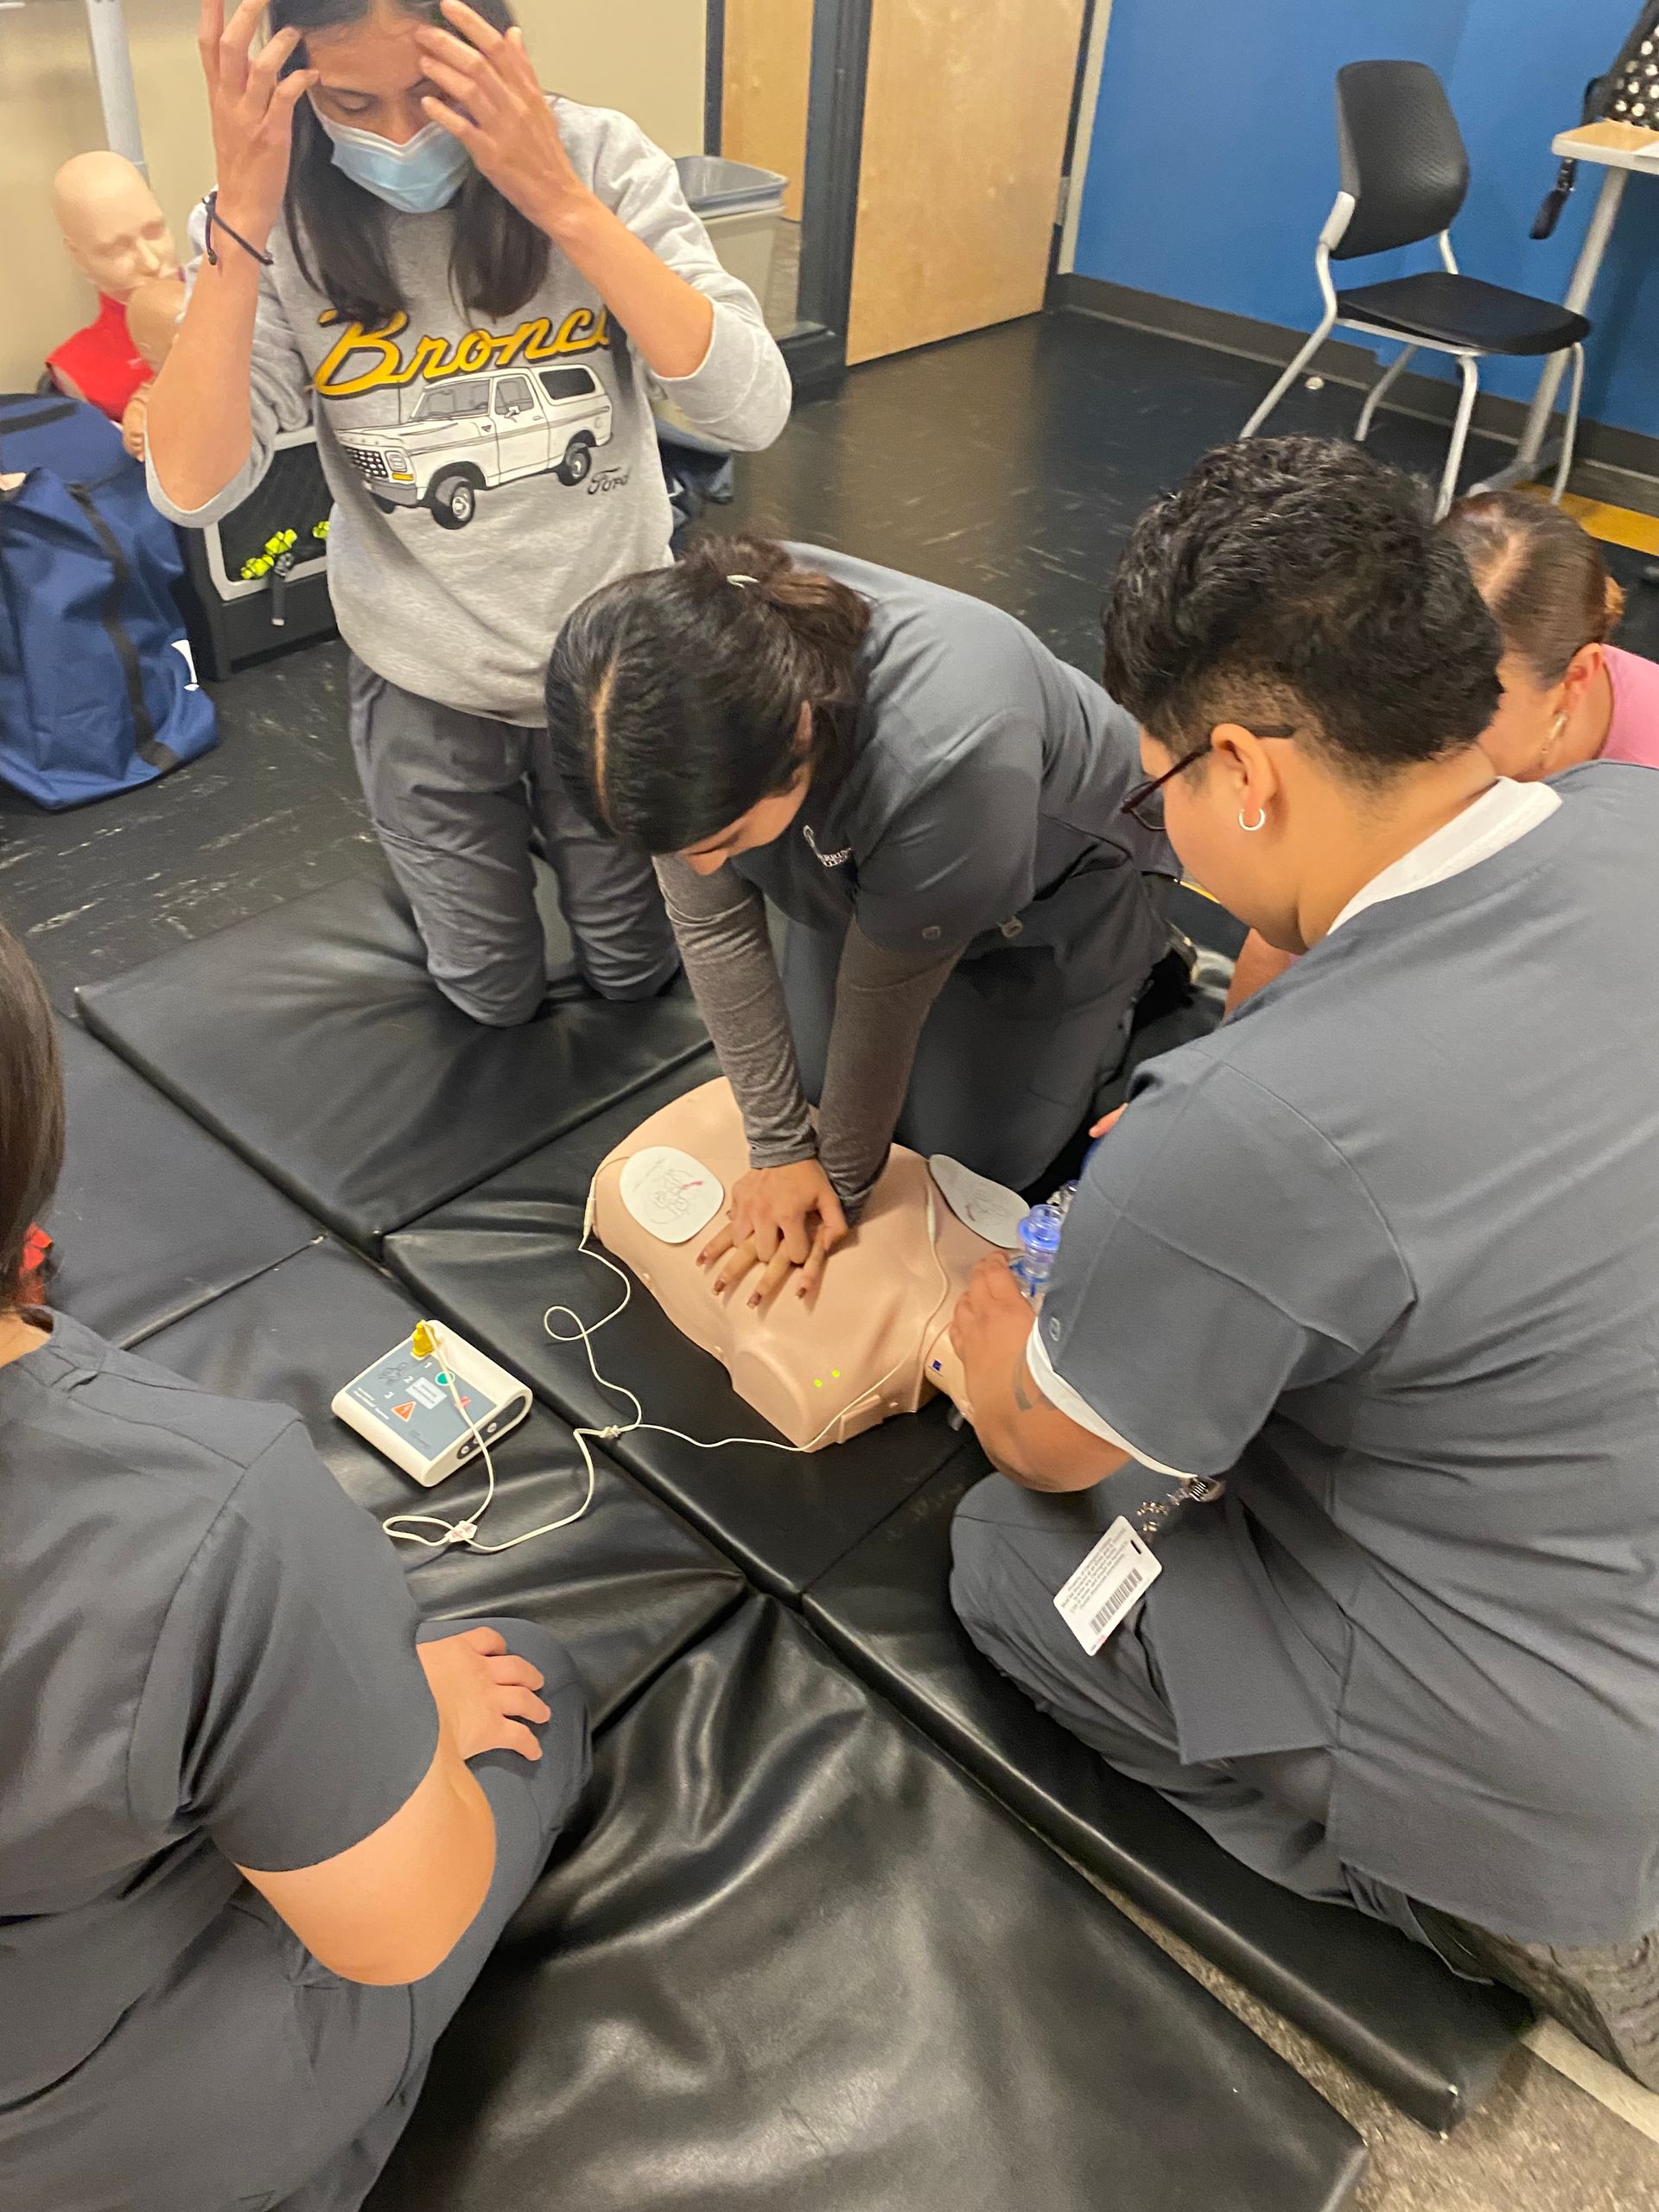 First Aid CPR Training in Tucson AZ